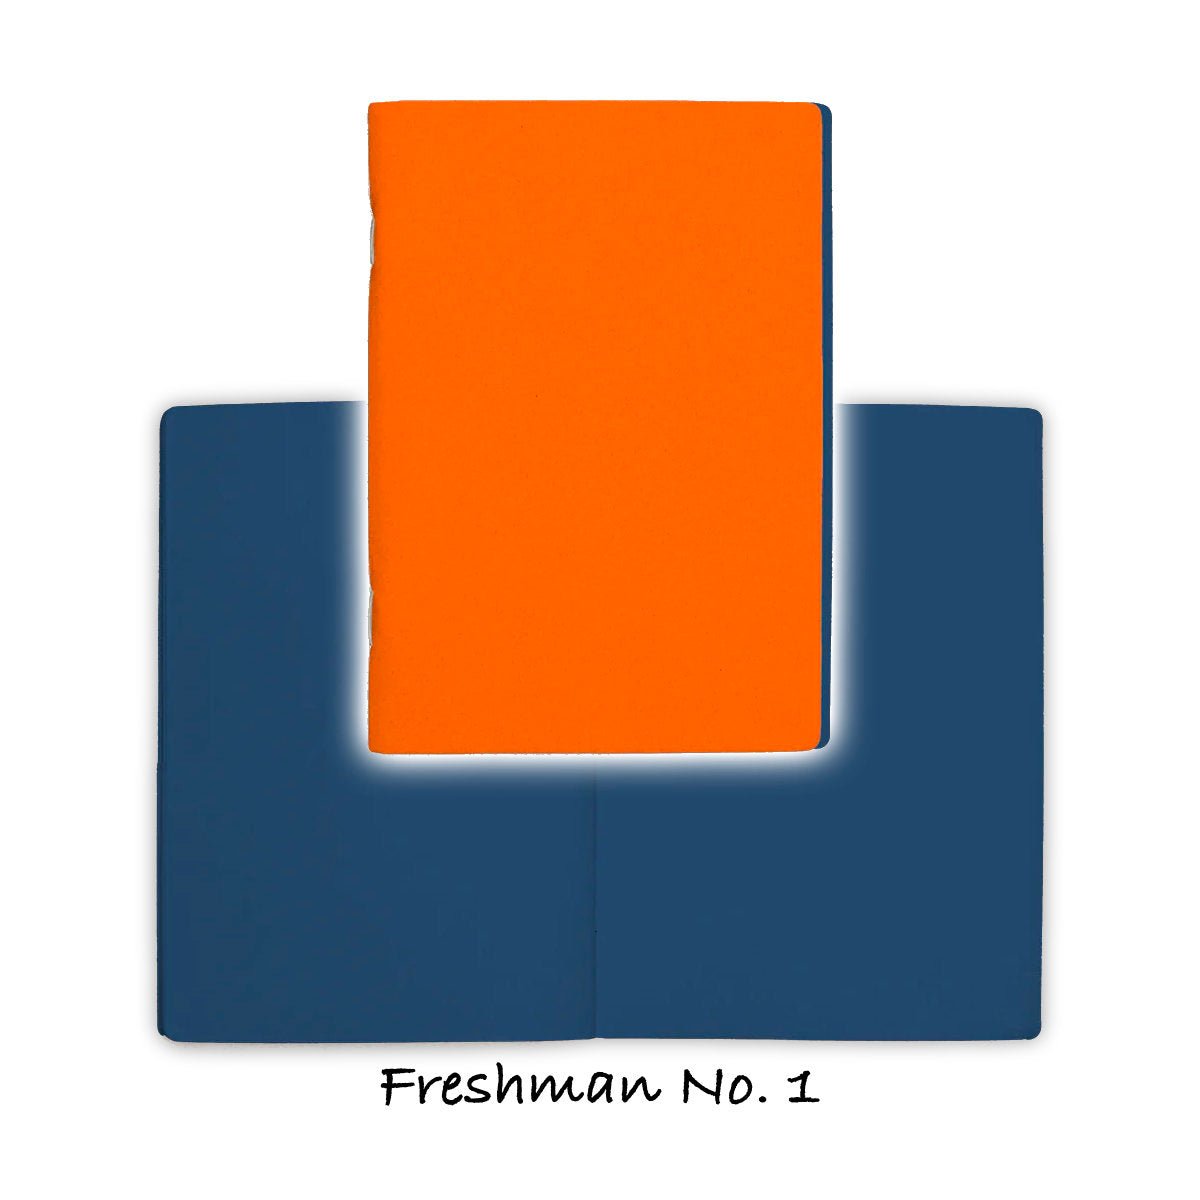 UGLYBOOKS - Freshman No. 1 - Single Notebook - Notegeist